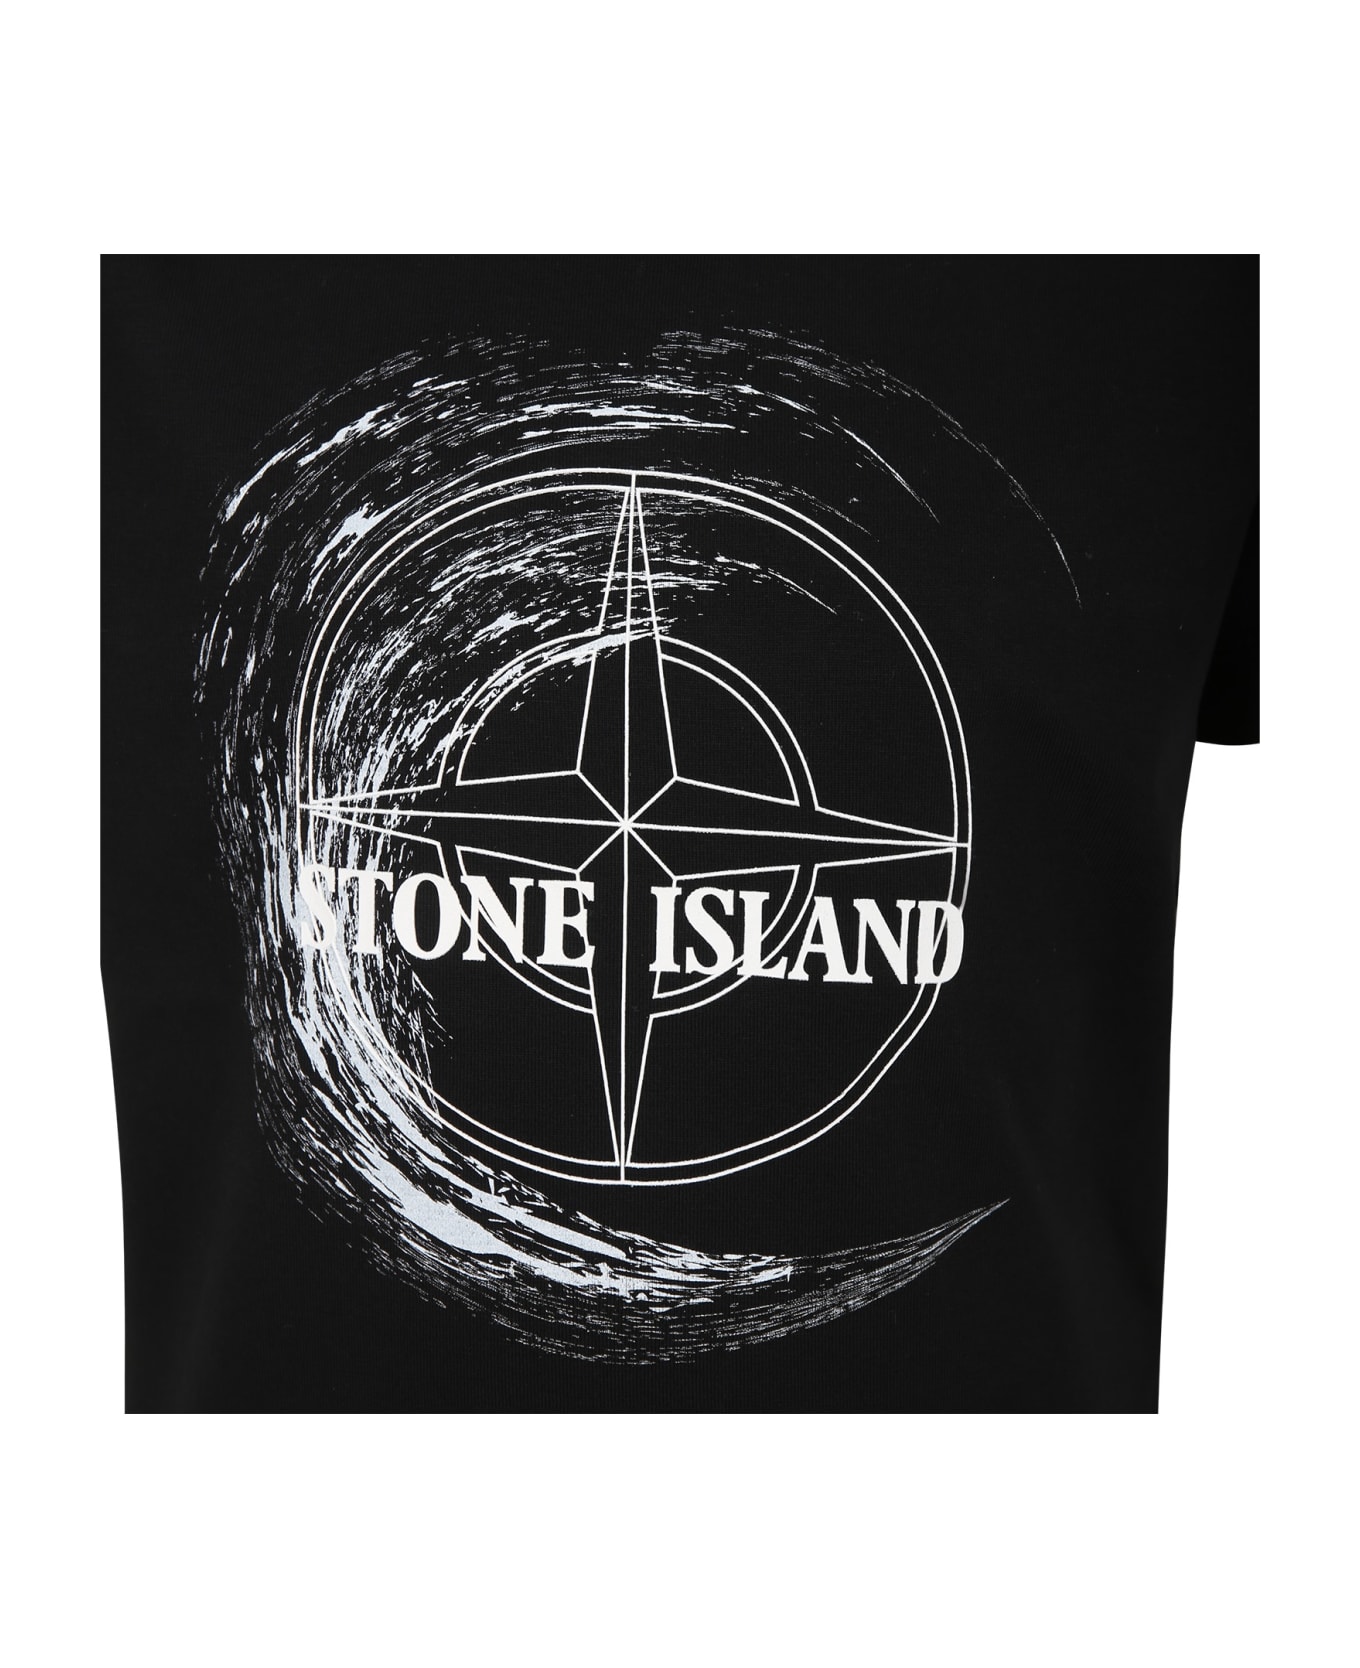 Stone Island Junior Black T-shirt For Boy With Print And Logo - Black